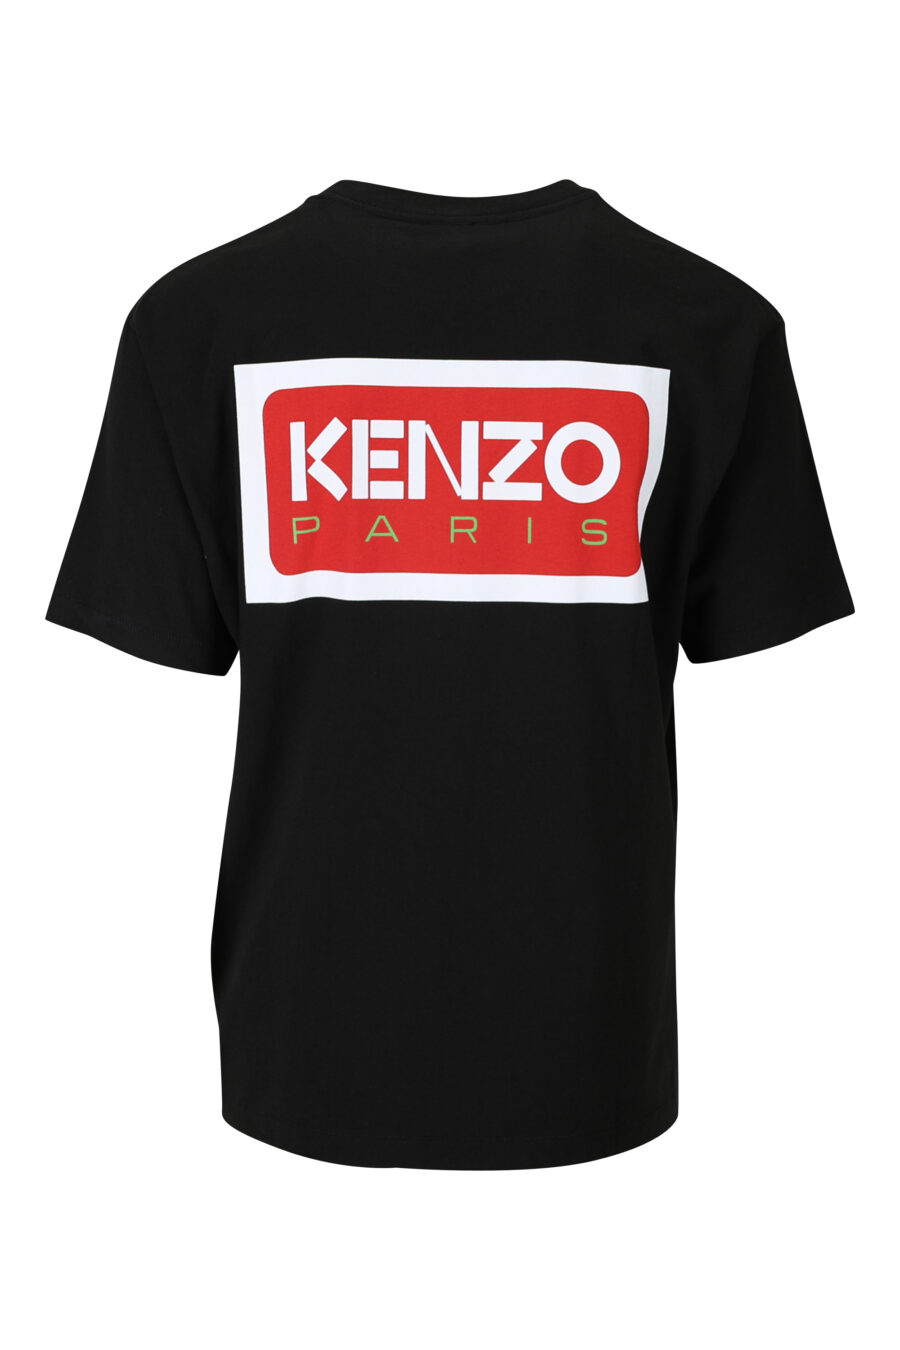 T-shirt black with small logo "kenzo paris" - 3612230542990 1